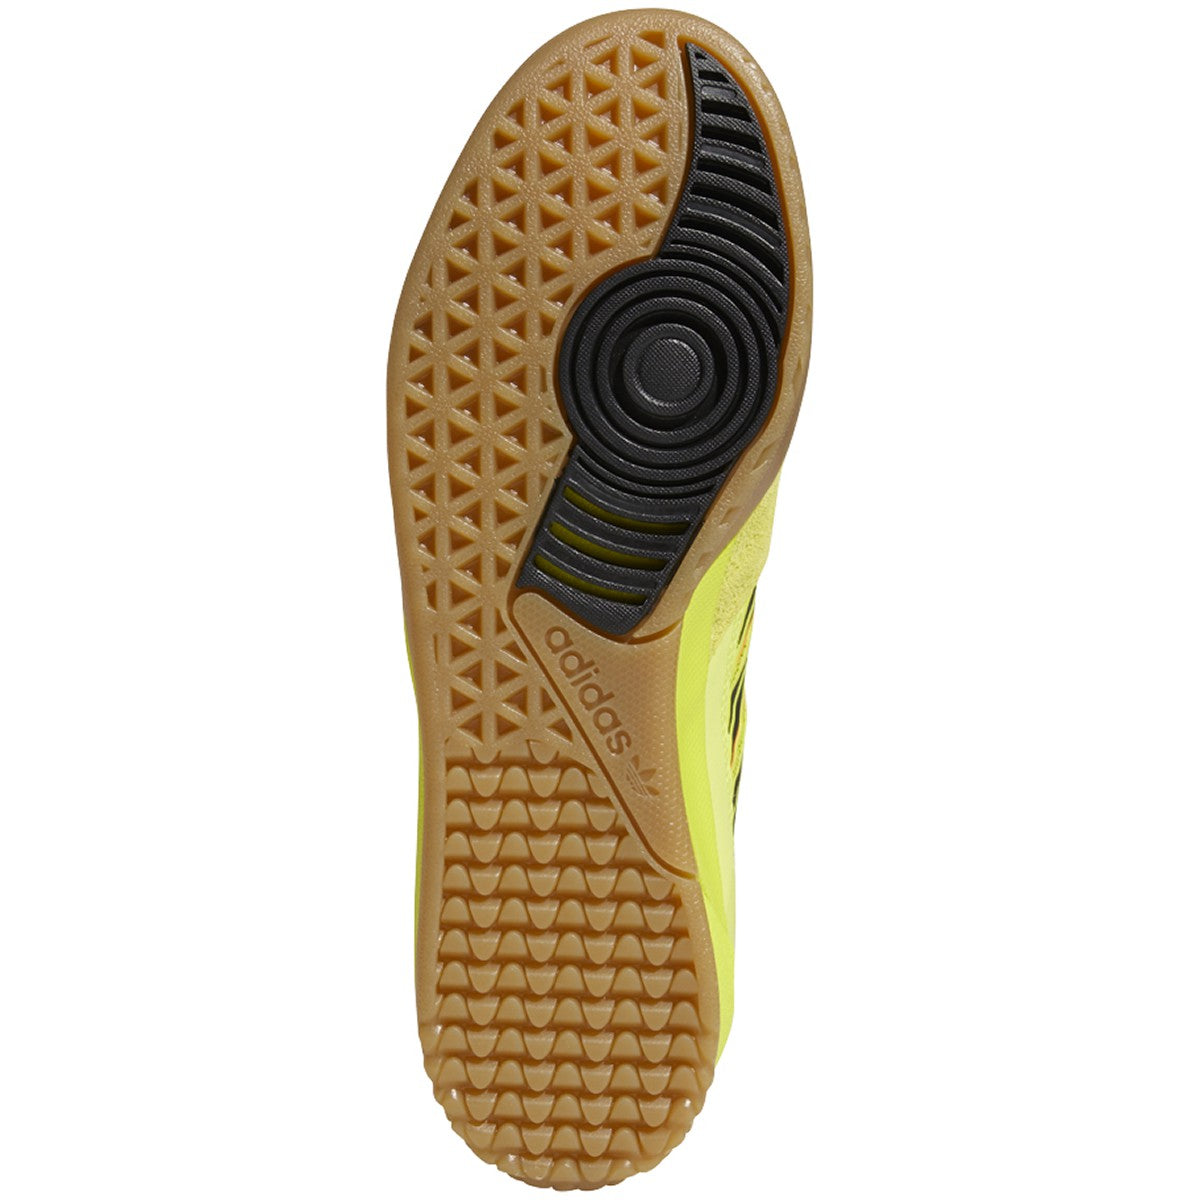 Acid Yellow Copa Nationale Adidas Skateboarding Shoe Bottom